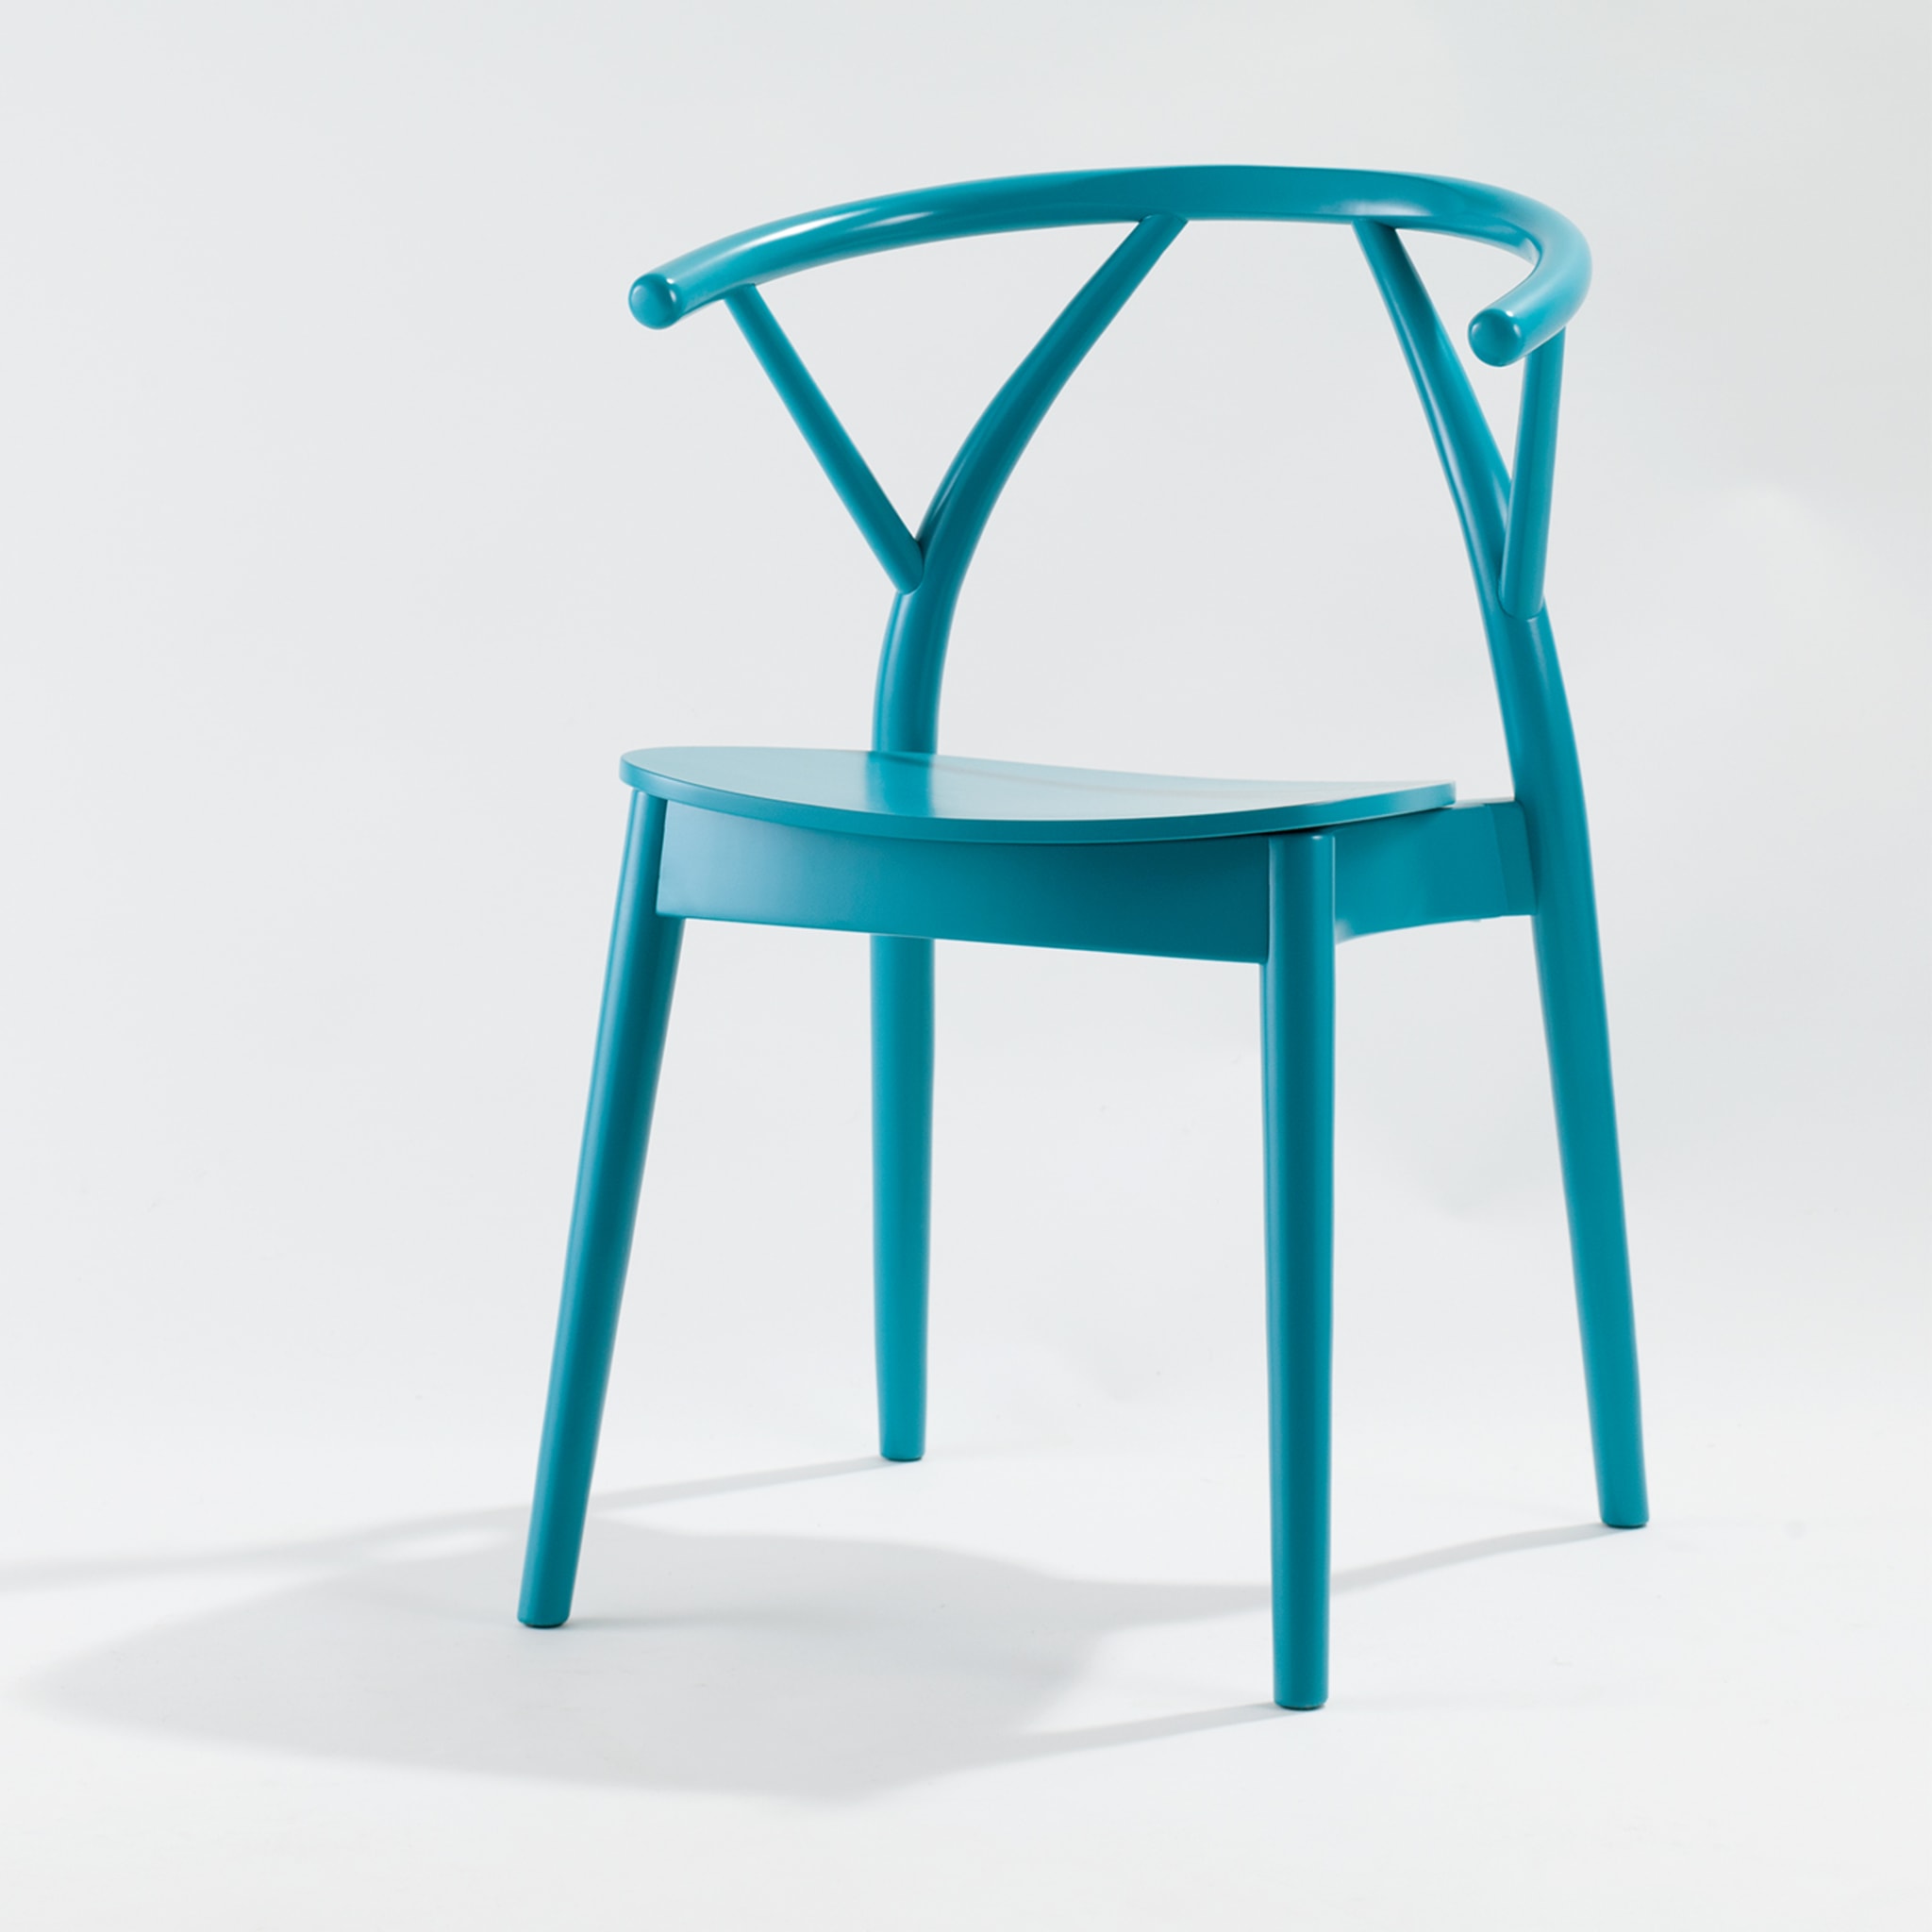 Yelly 971 Light Blue Chair by Markus Johansson - Alternative view 4